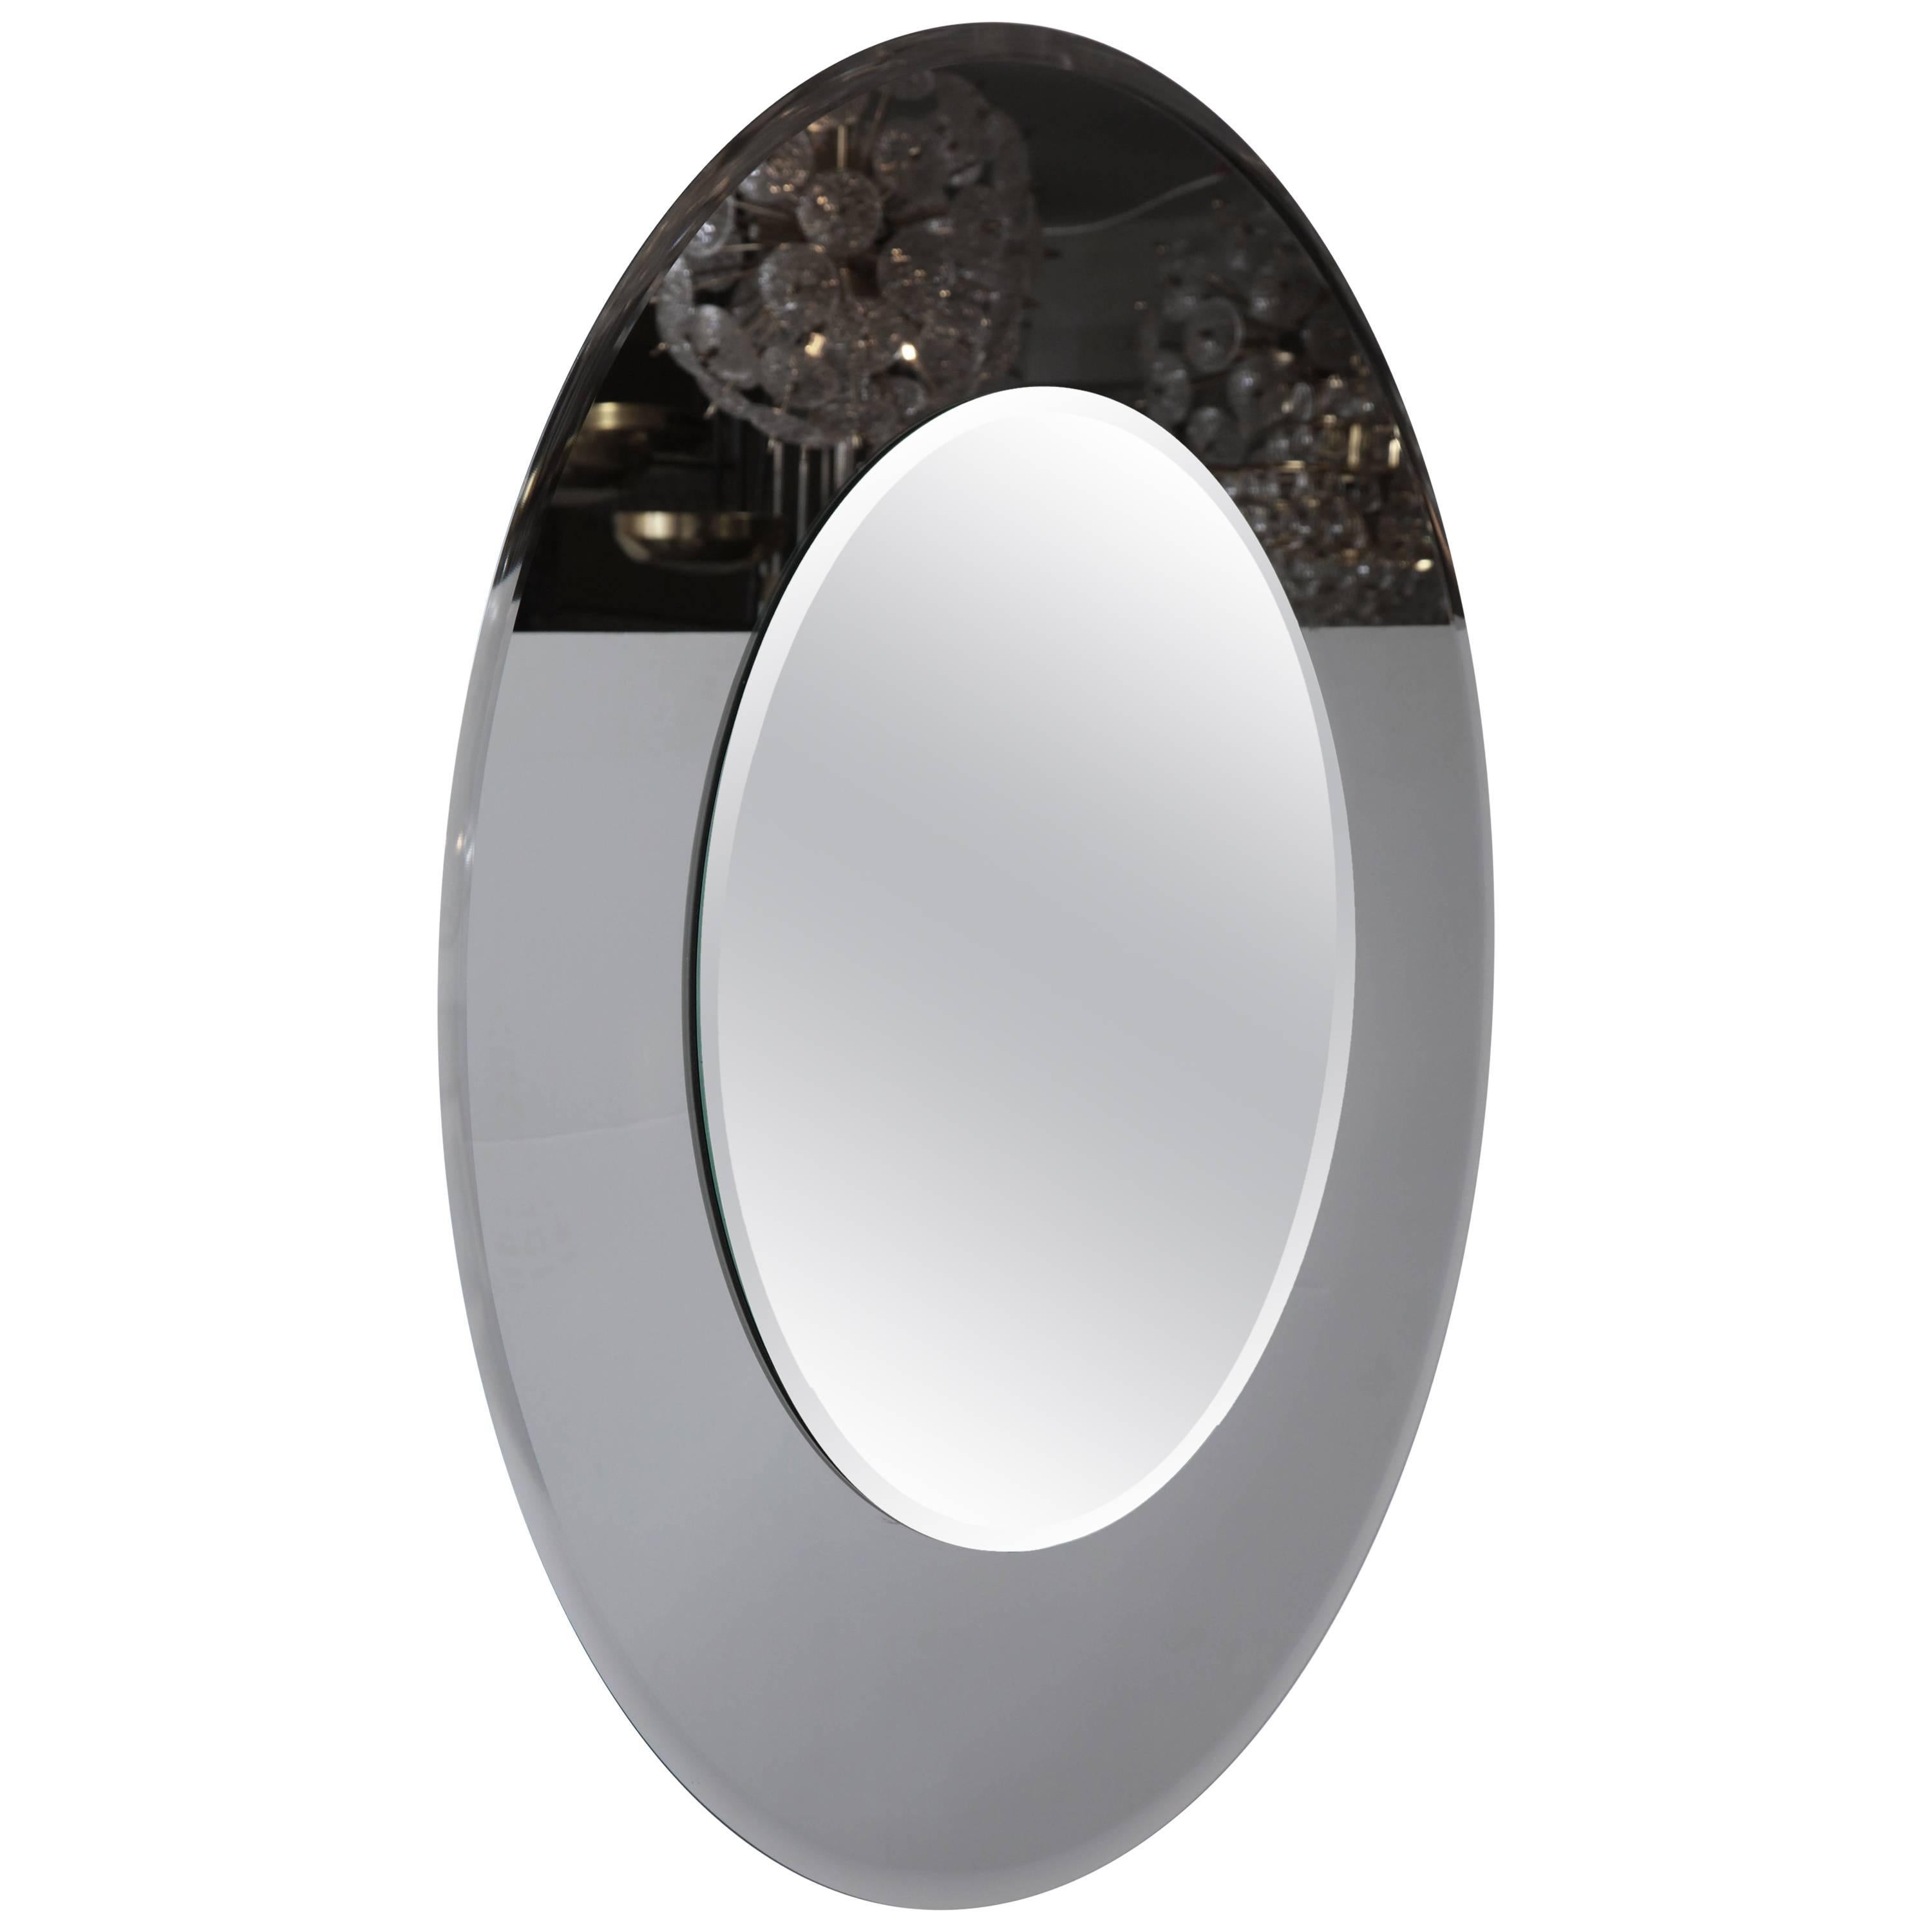 Large Round Beveled Mirror with Smoke Glass Border